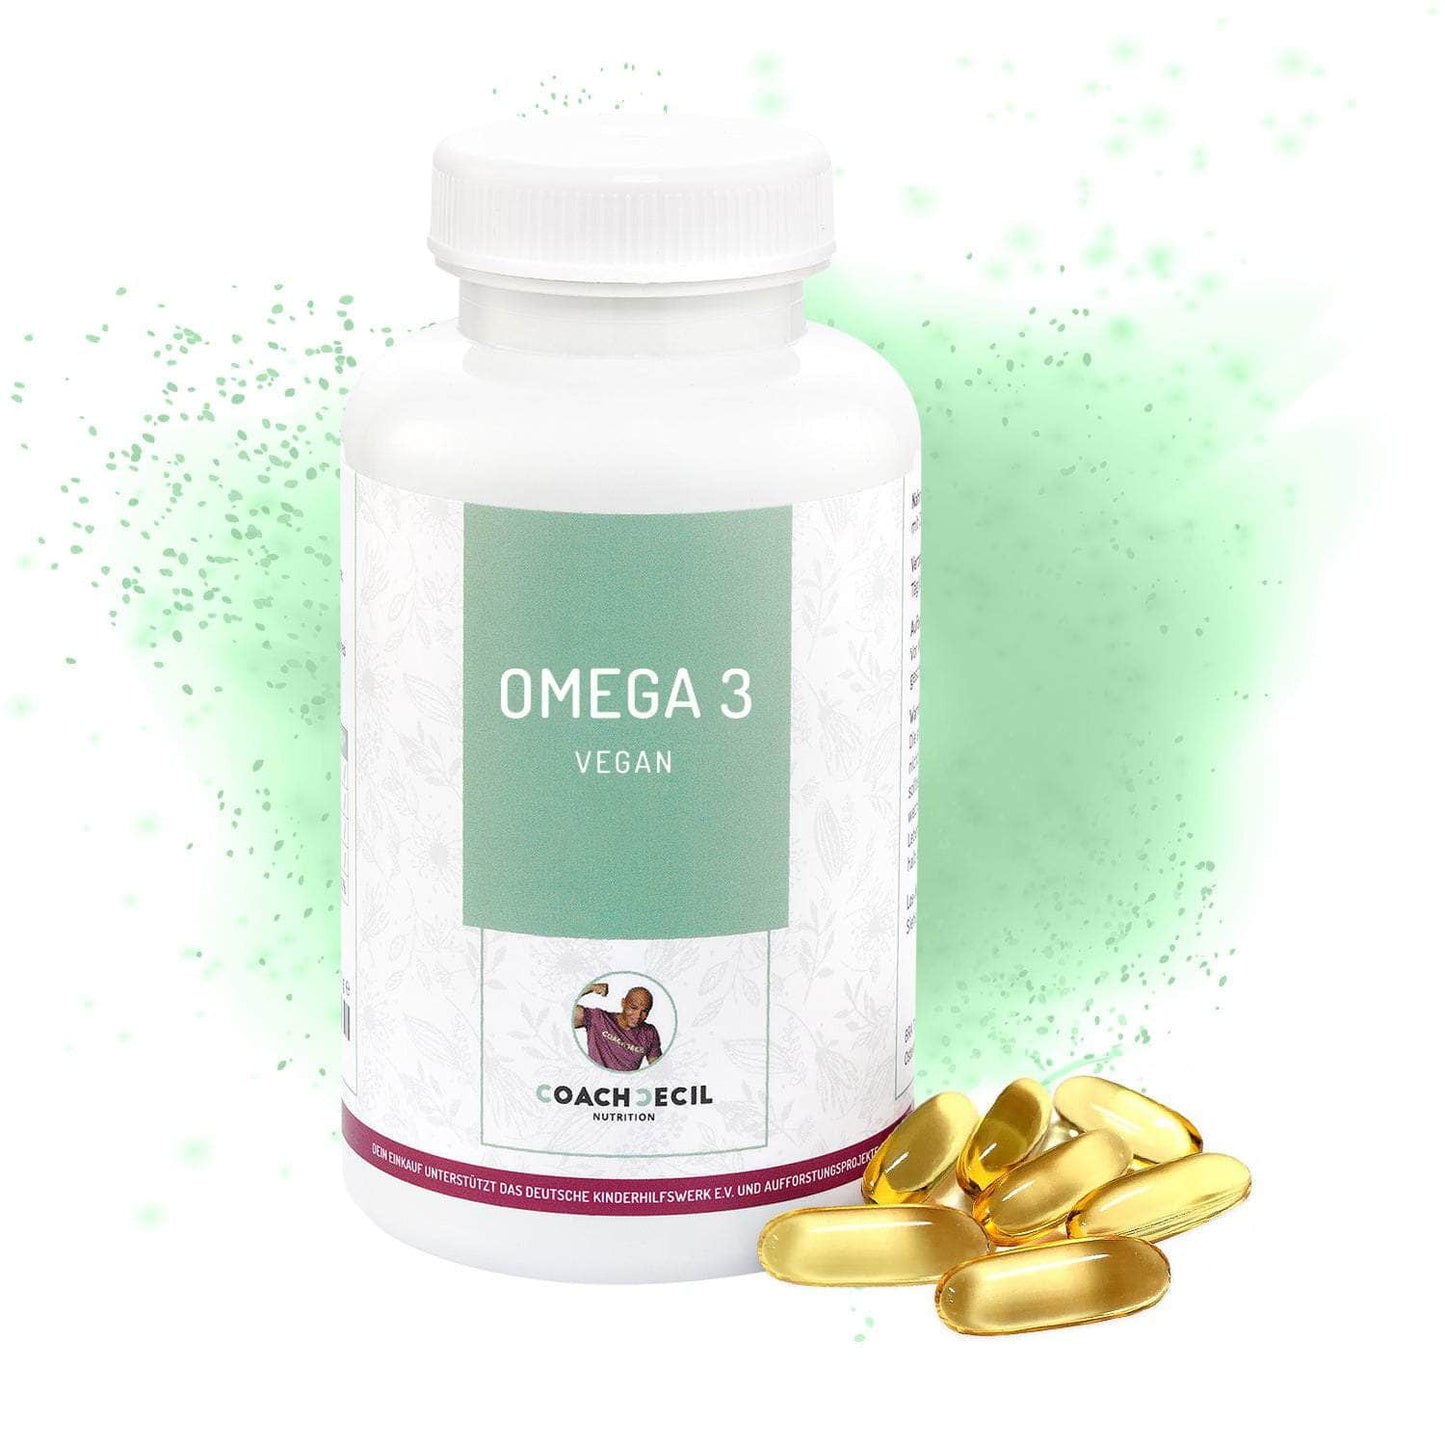 Omega 3 Kapseln mit Algenöl - Vegan